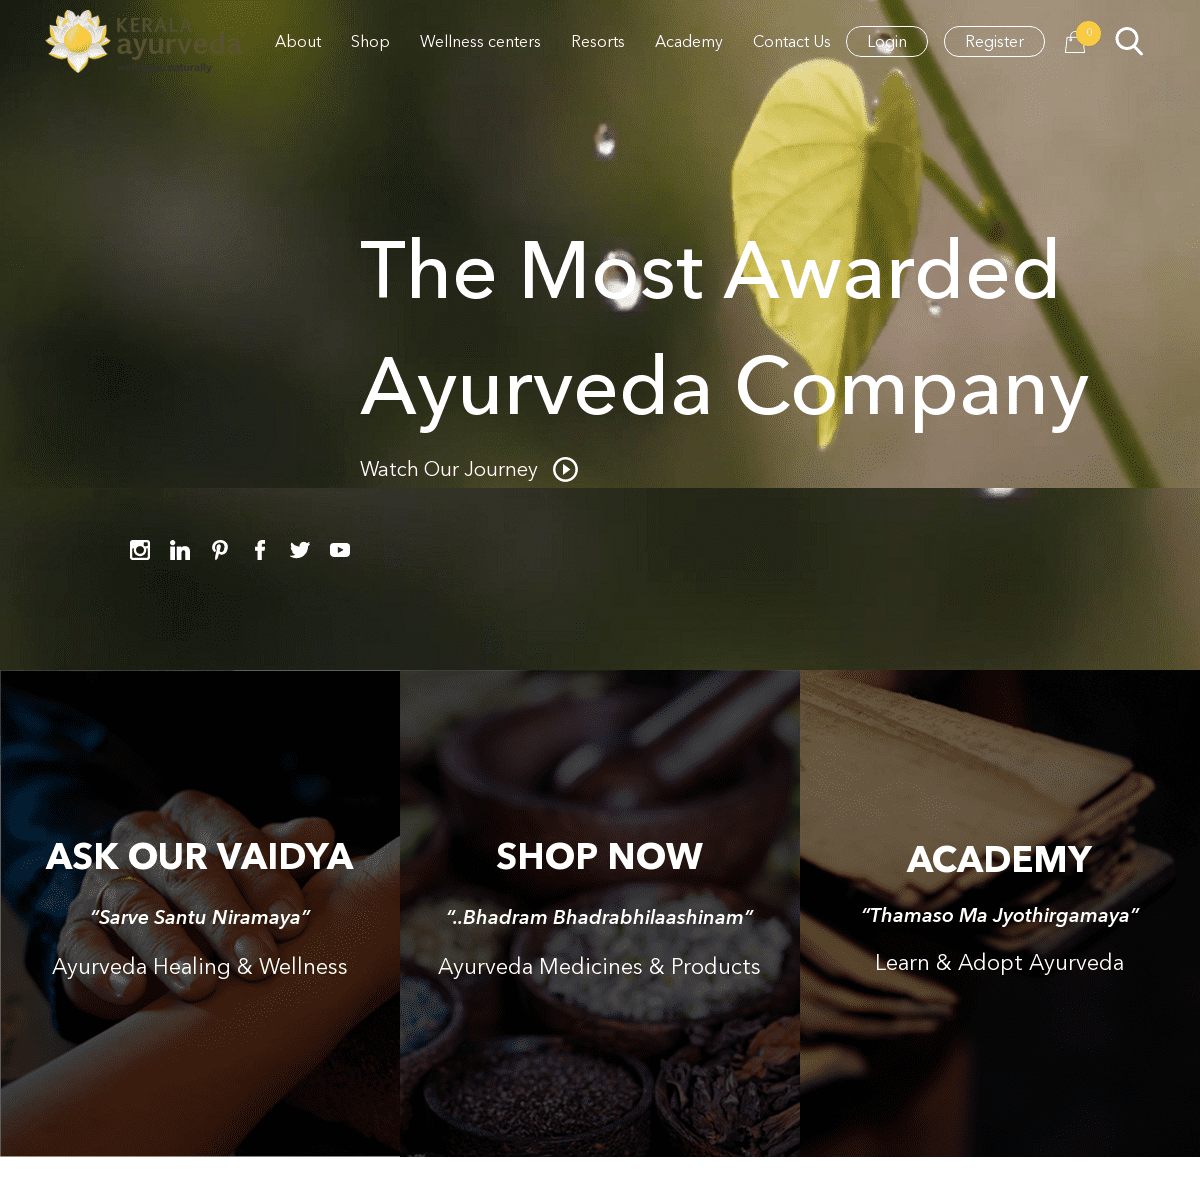  Kerala Ayurveda Limited